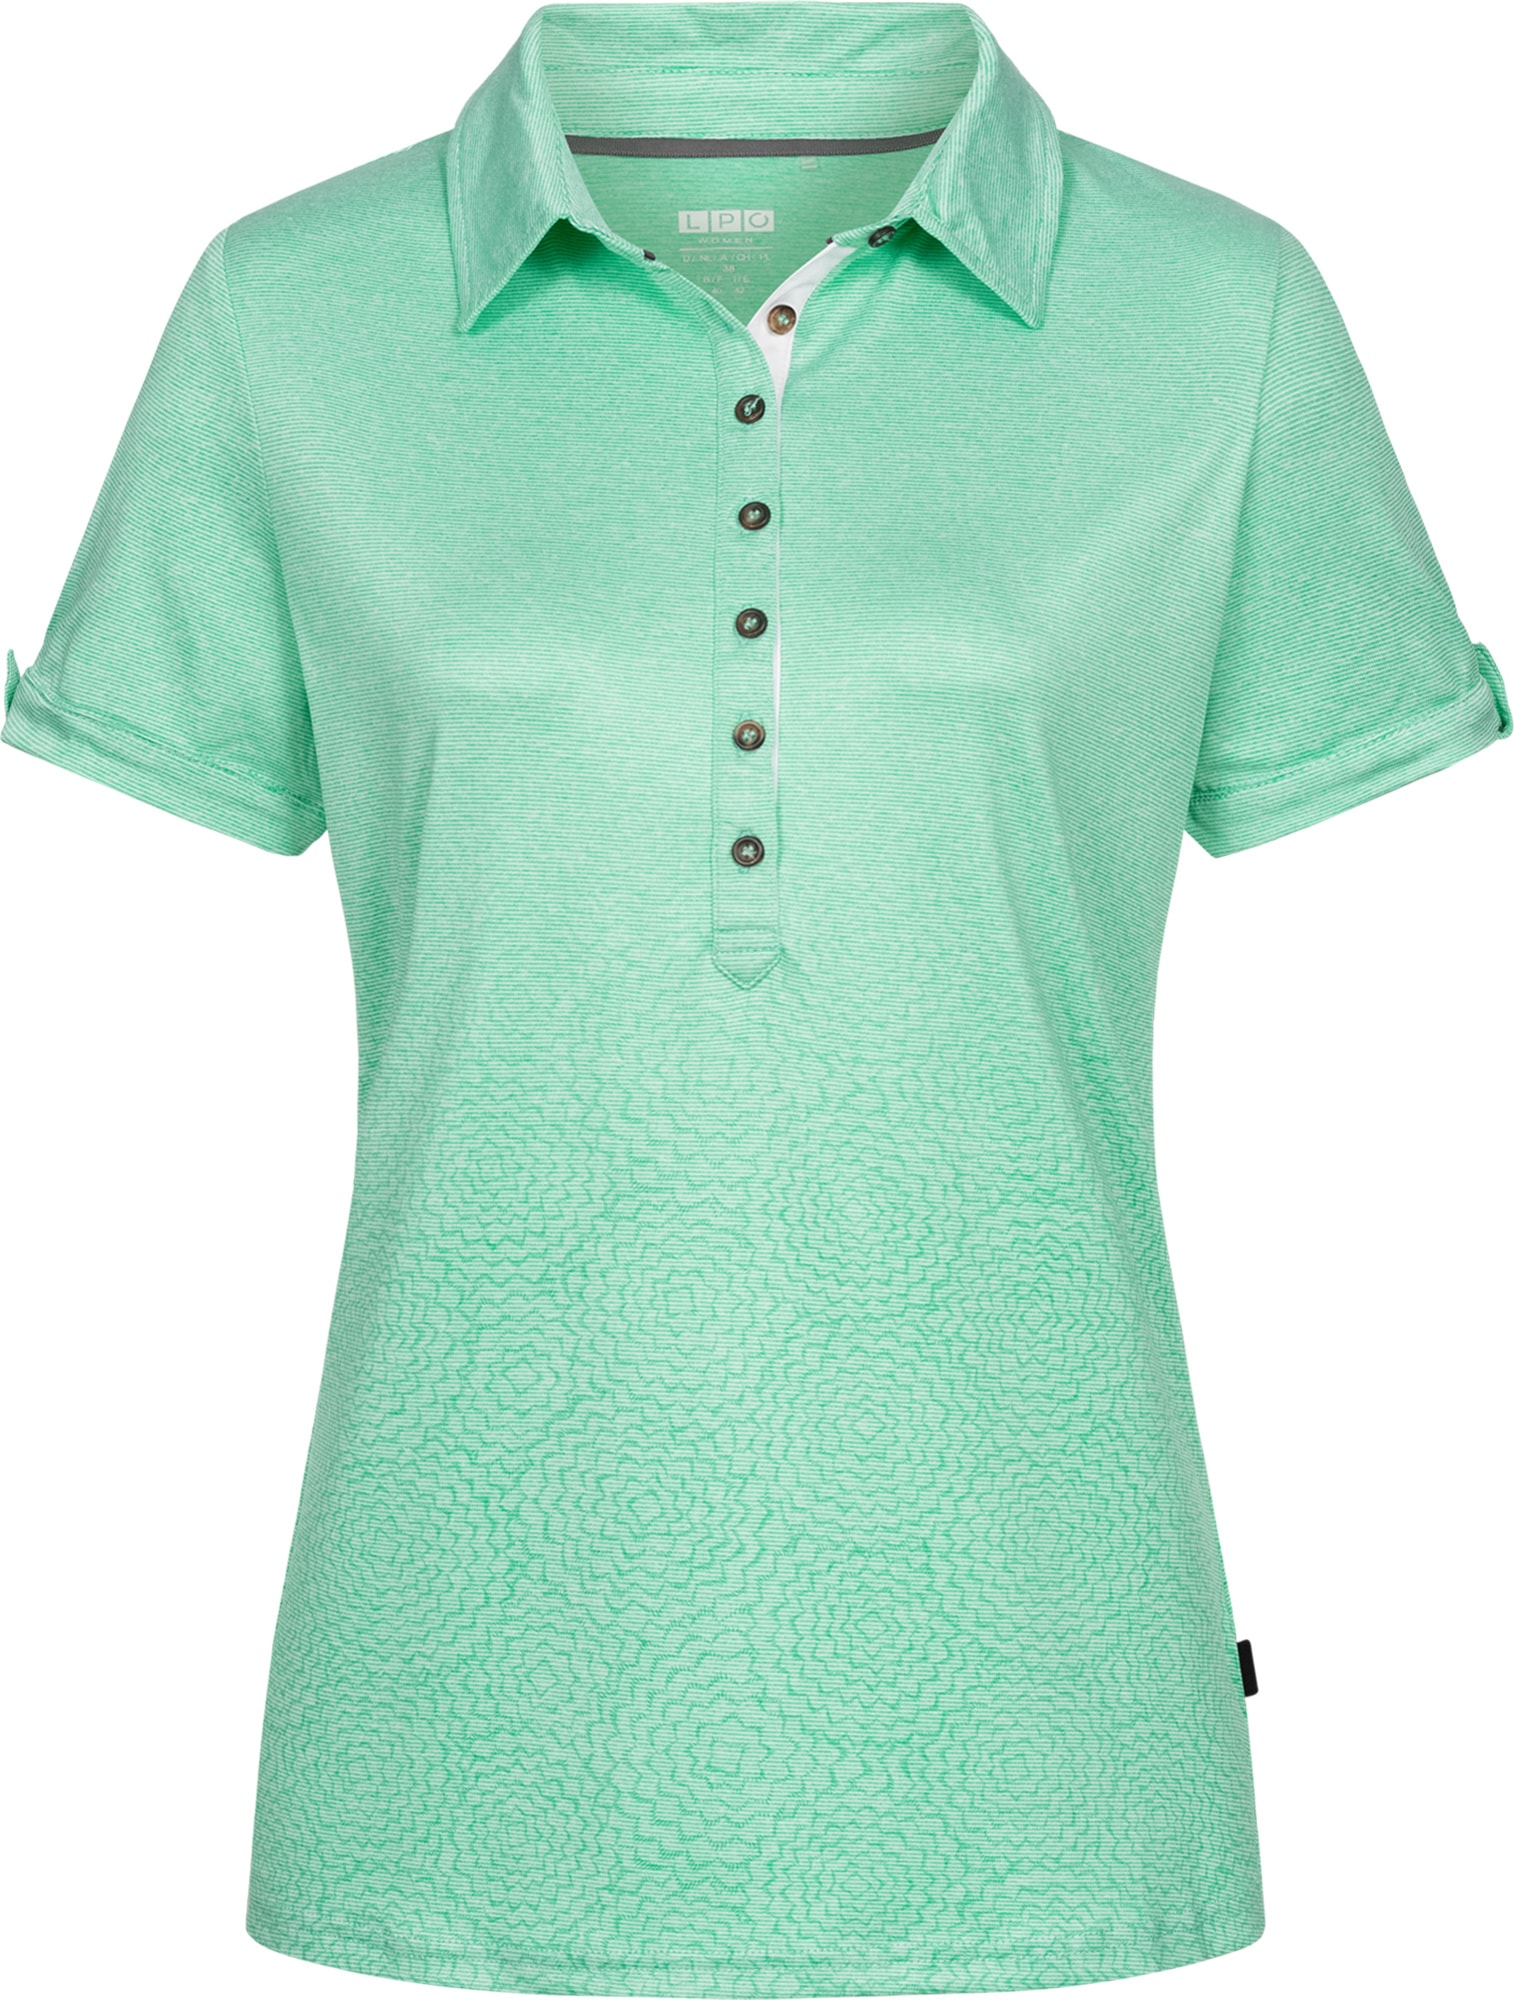 LPO Poloshirt »HEDLEY III NEW WOMEN«, Funktionspolo mit nachhaltig  recyceltem Polyester versandkostenfrei kaufen